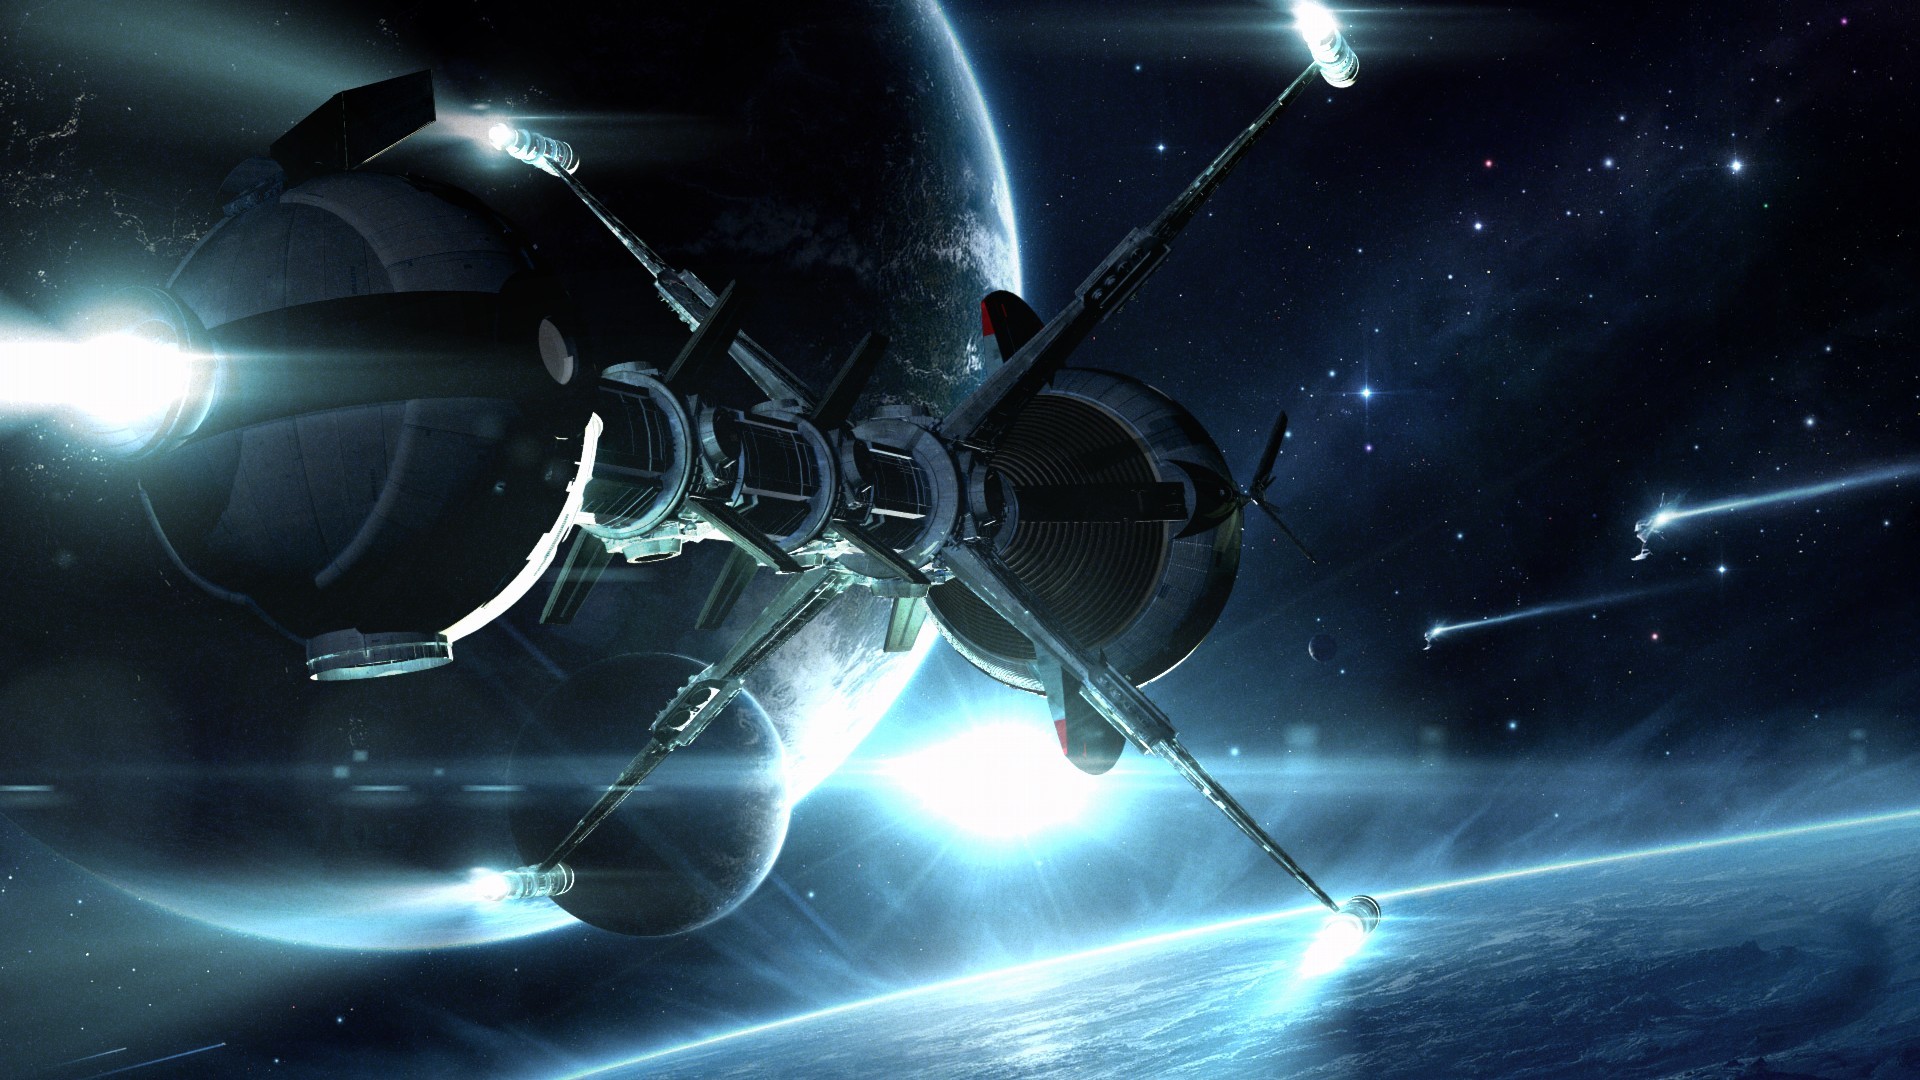 Sci Fi Spacecraft Spaceship Planets Stars Art Wallpaper 1920x1080 30891 Wallpaperup 1920x1080